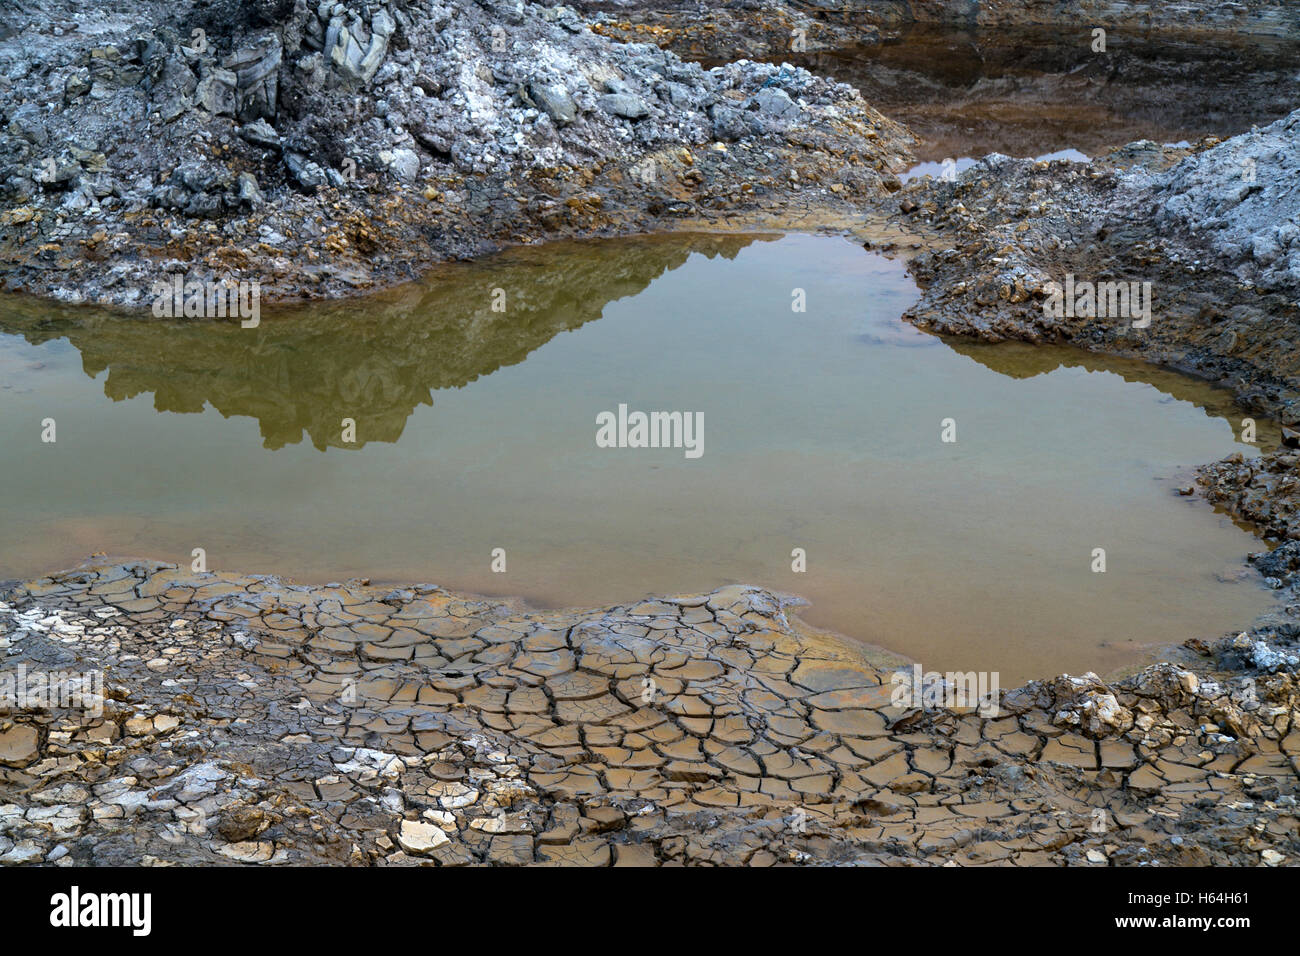 Kaolin mining at Belitung island, Indonesia Stock Photo